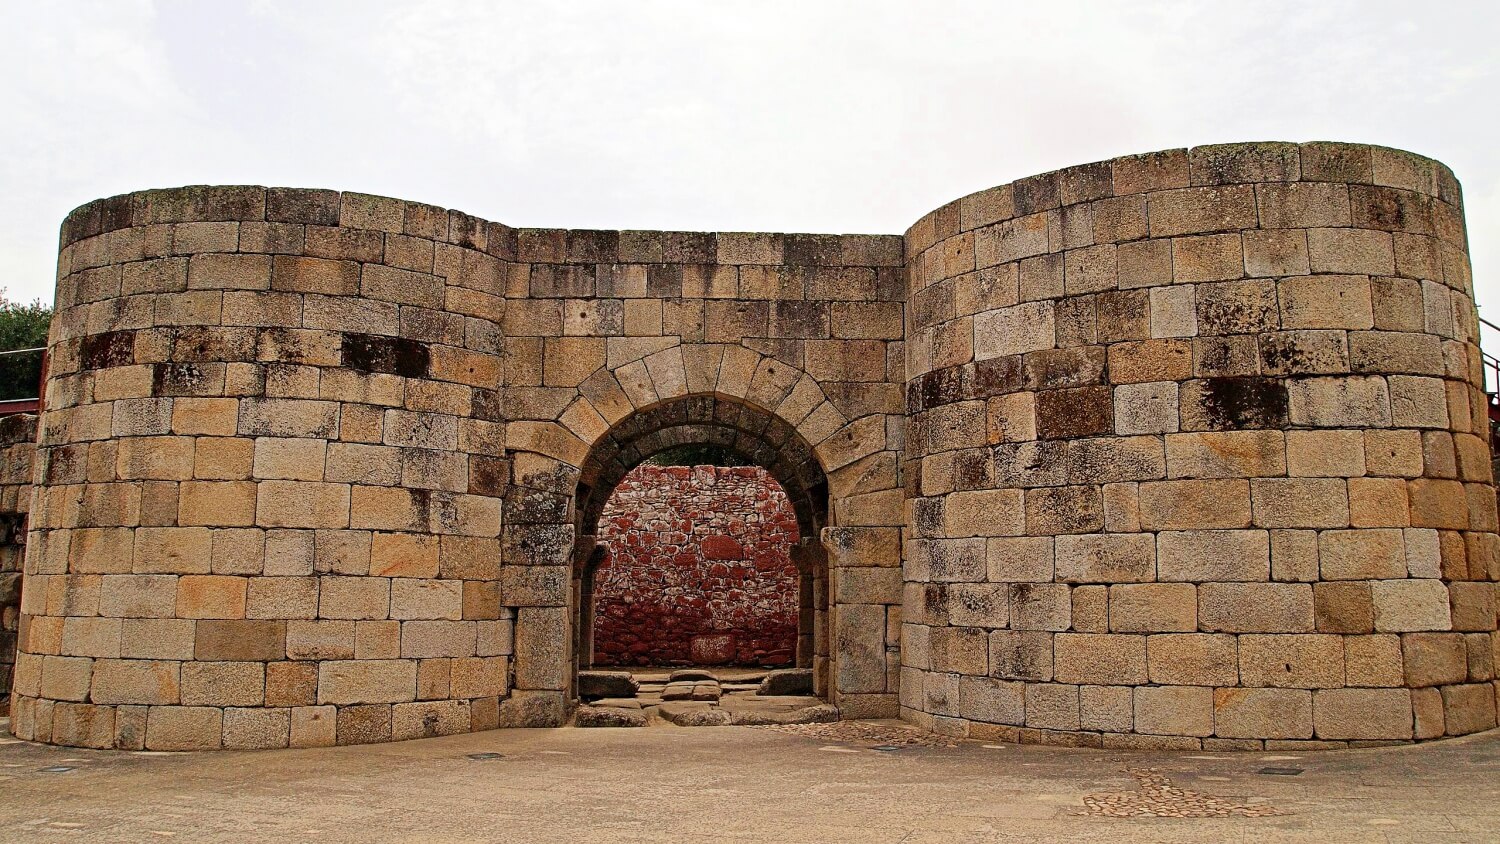 Castelo de Idanha-a-Velha